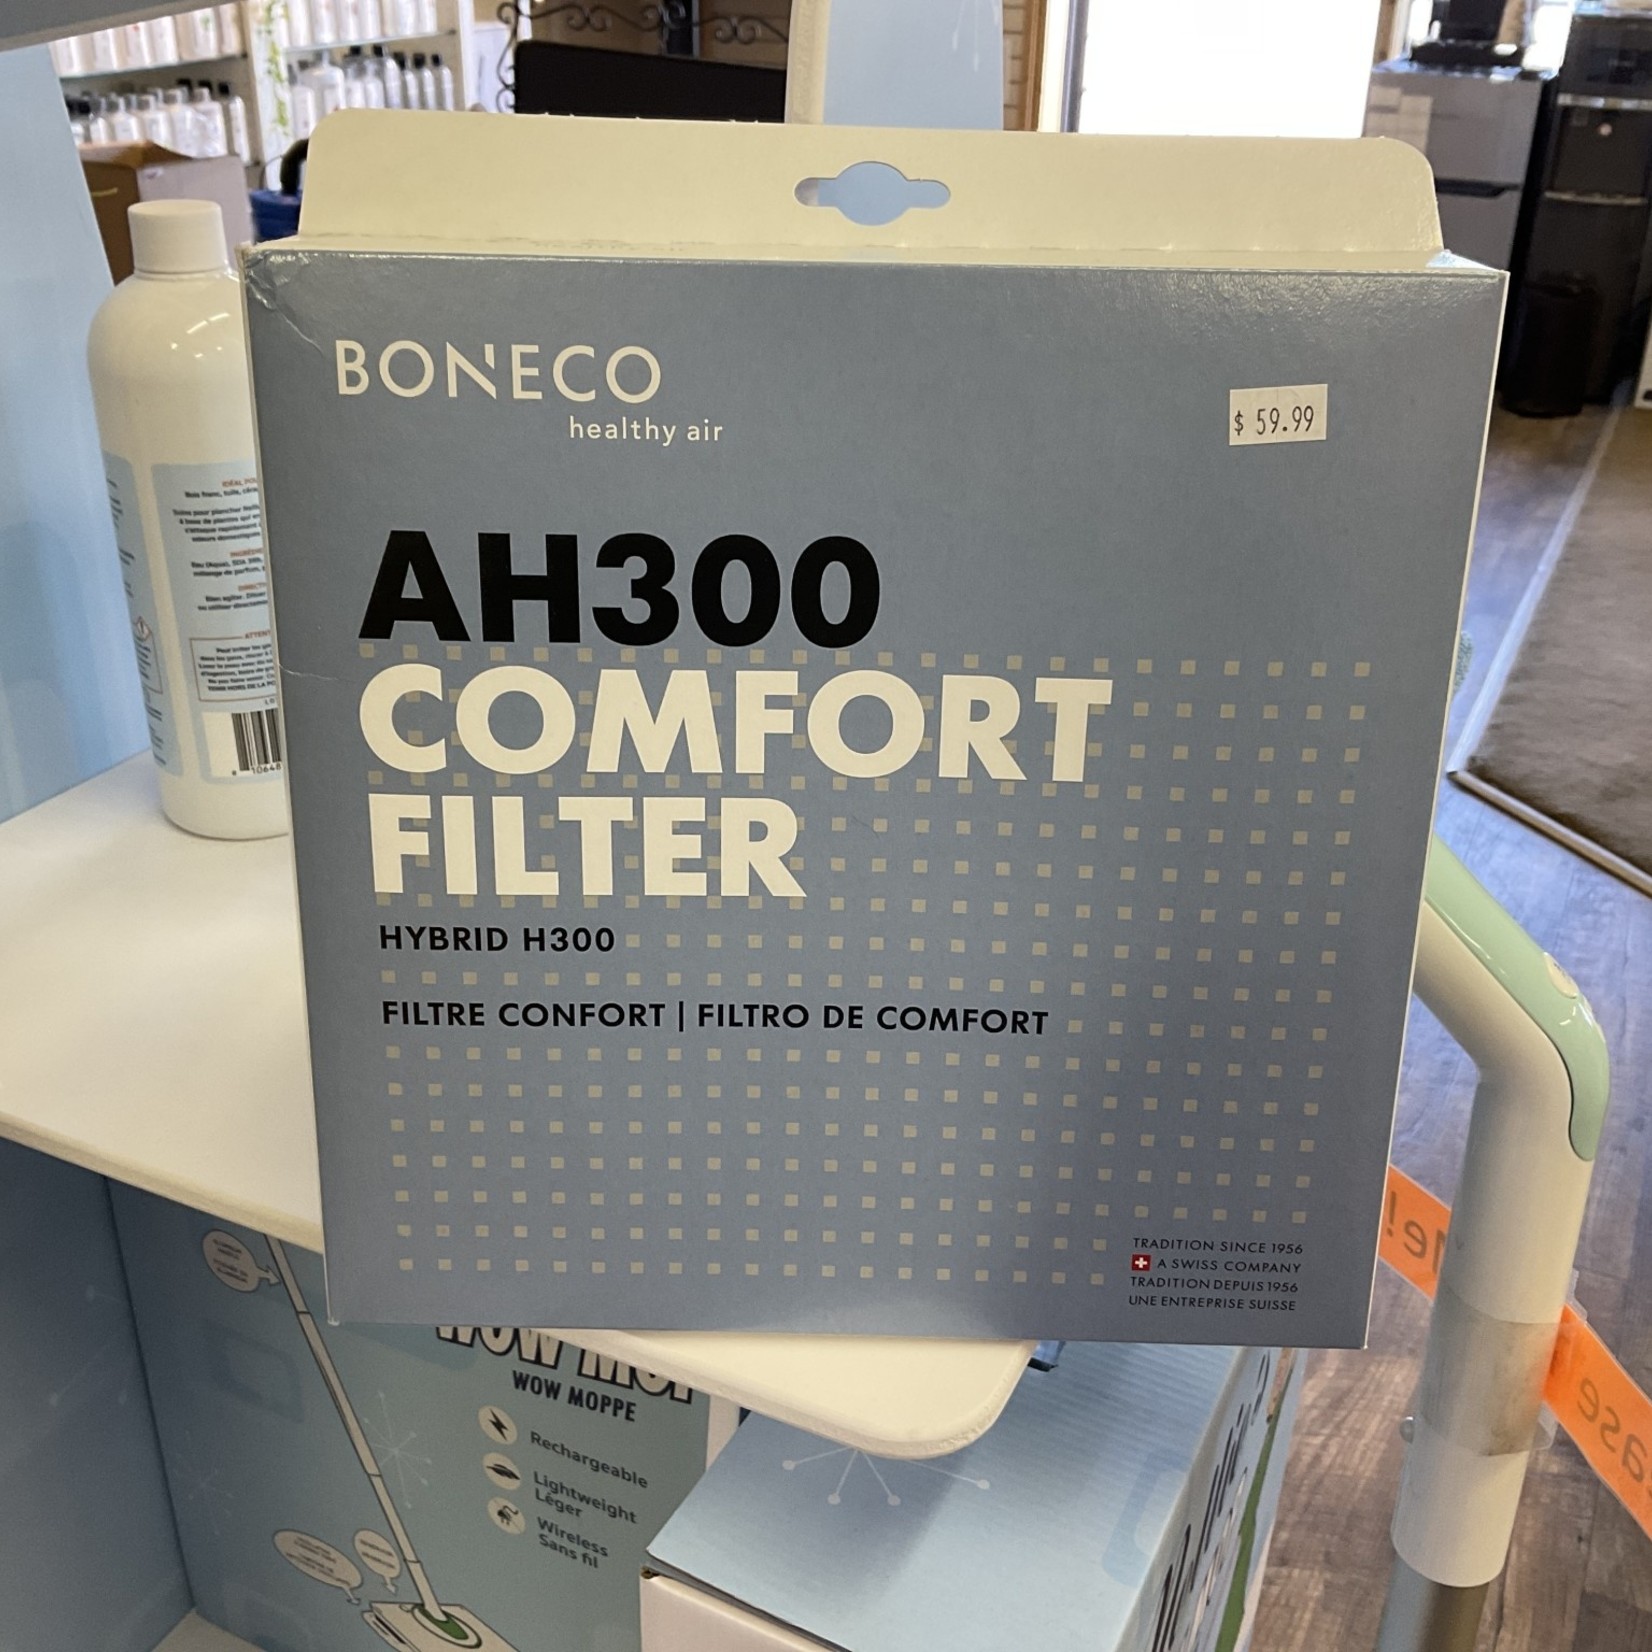 Boneco Boneco AH300 Comfort Filter (hybrid H300)